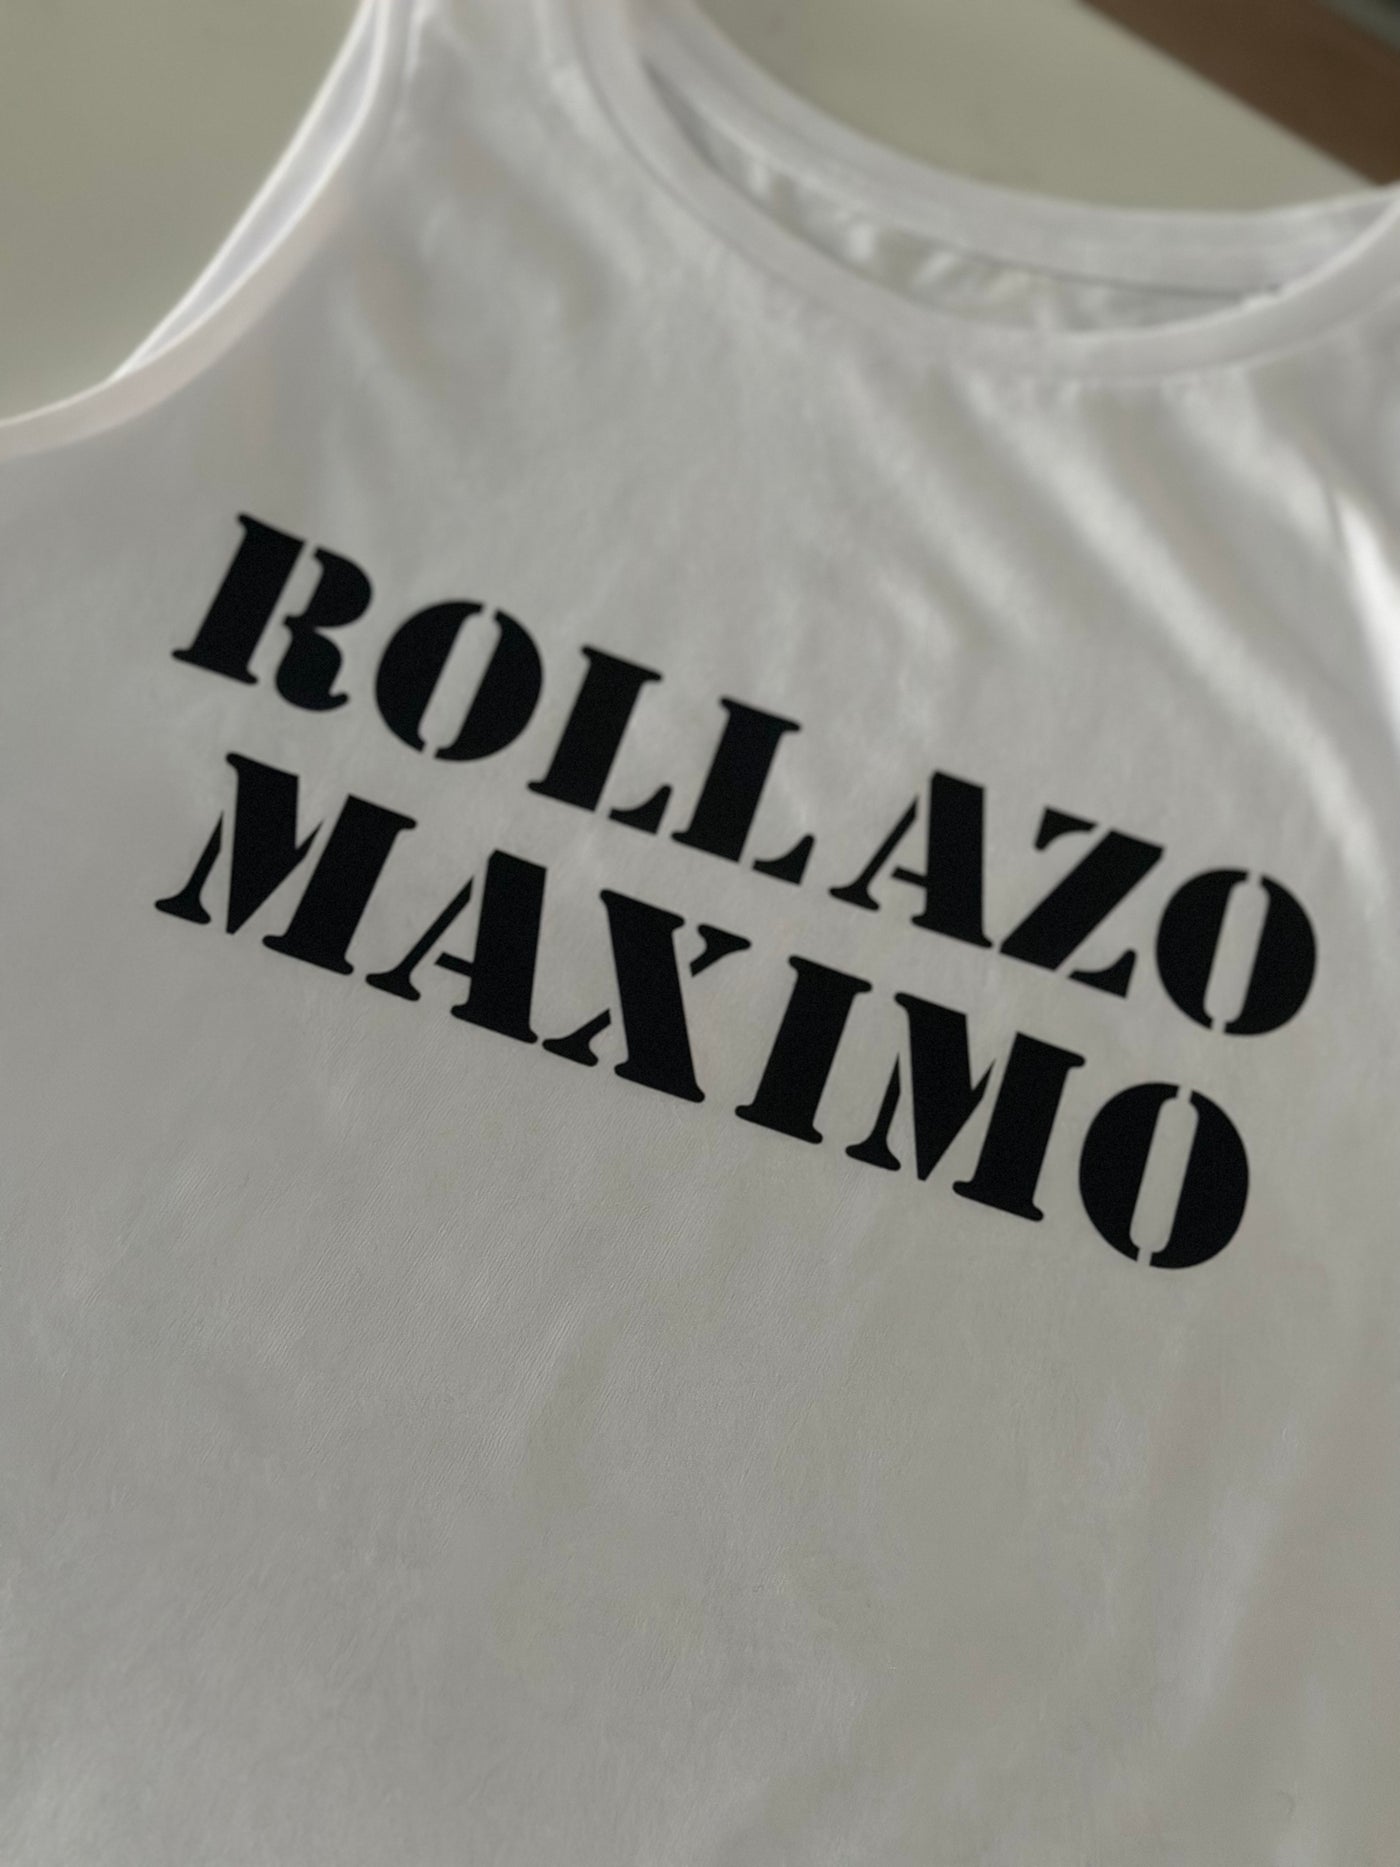 Camiseta “Rollazo máximo”